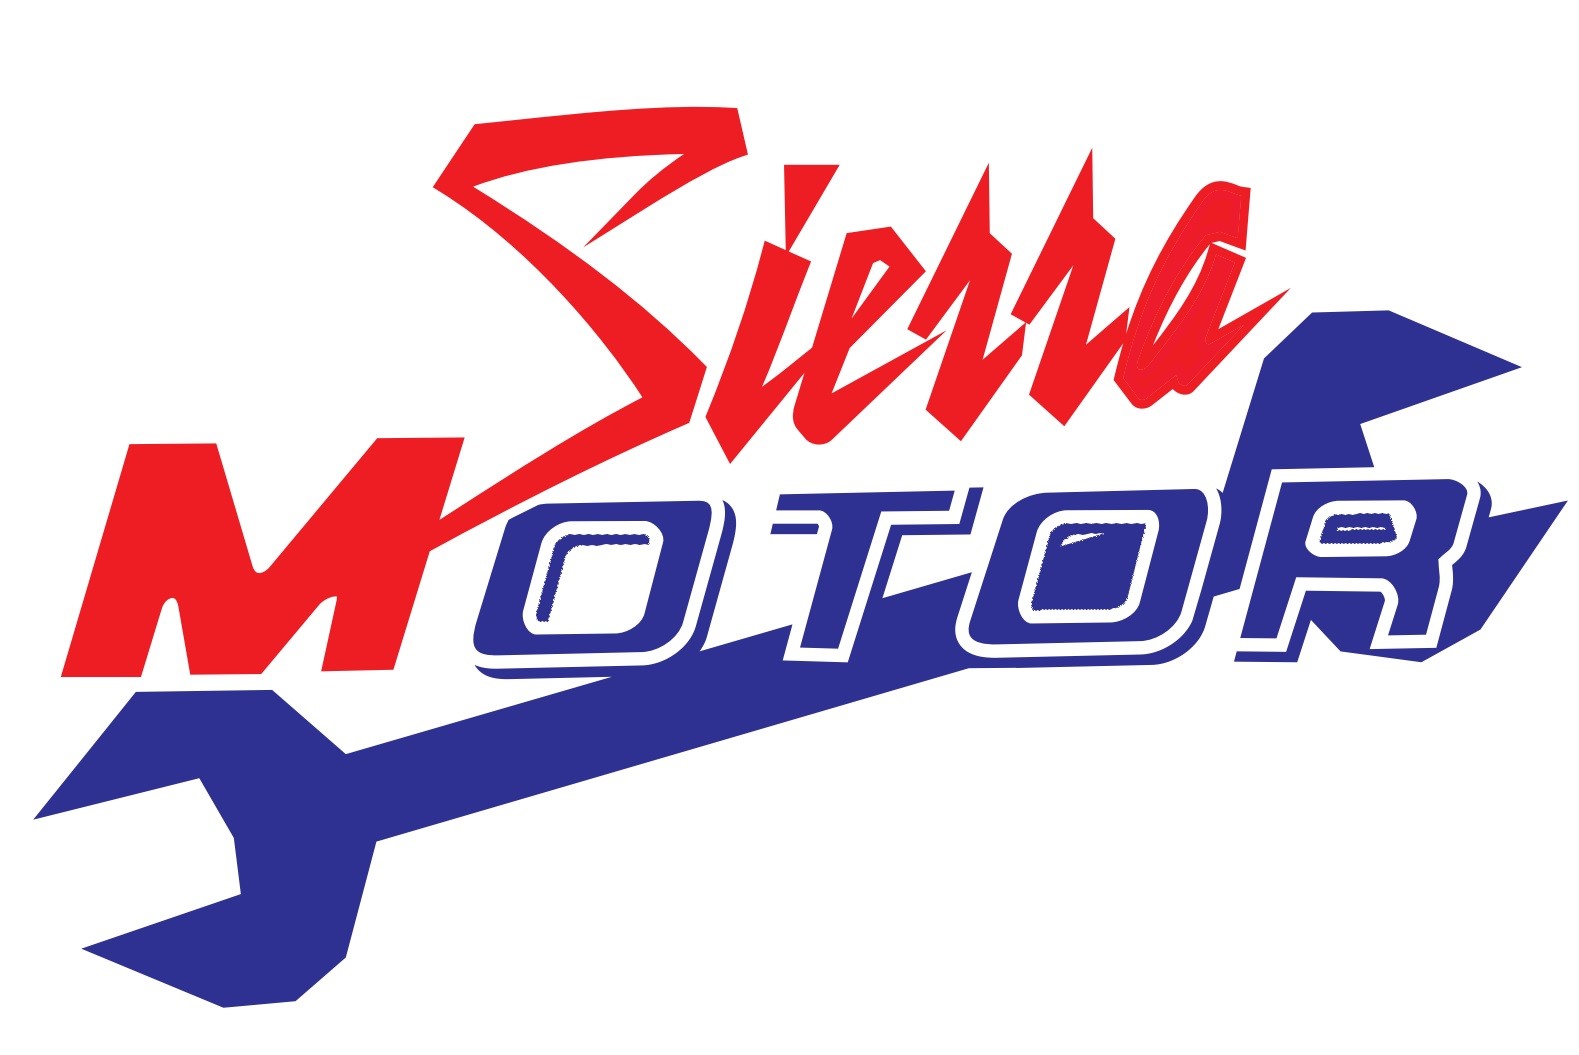 SierraMotor